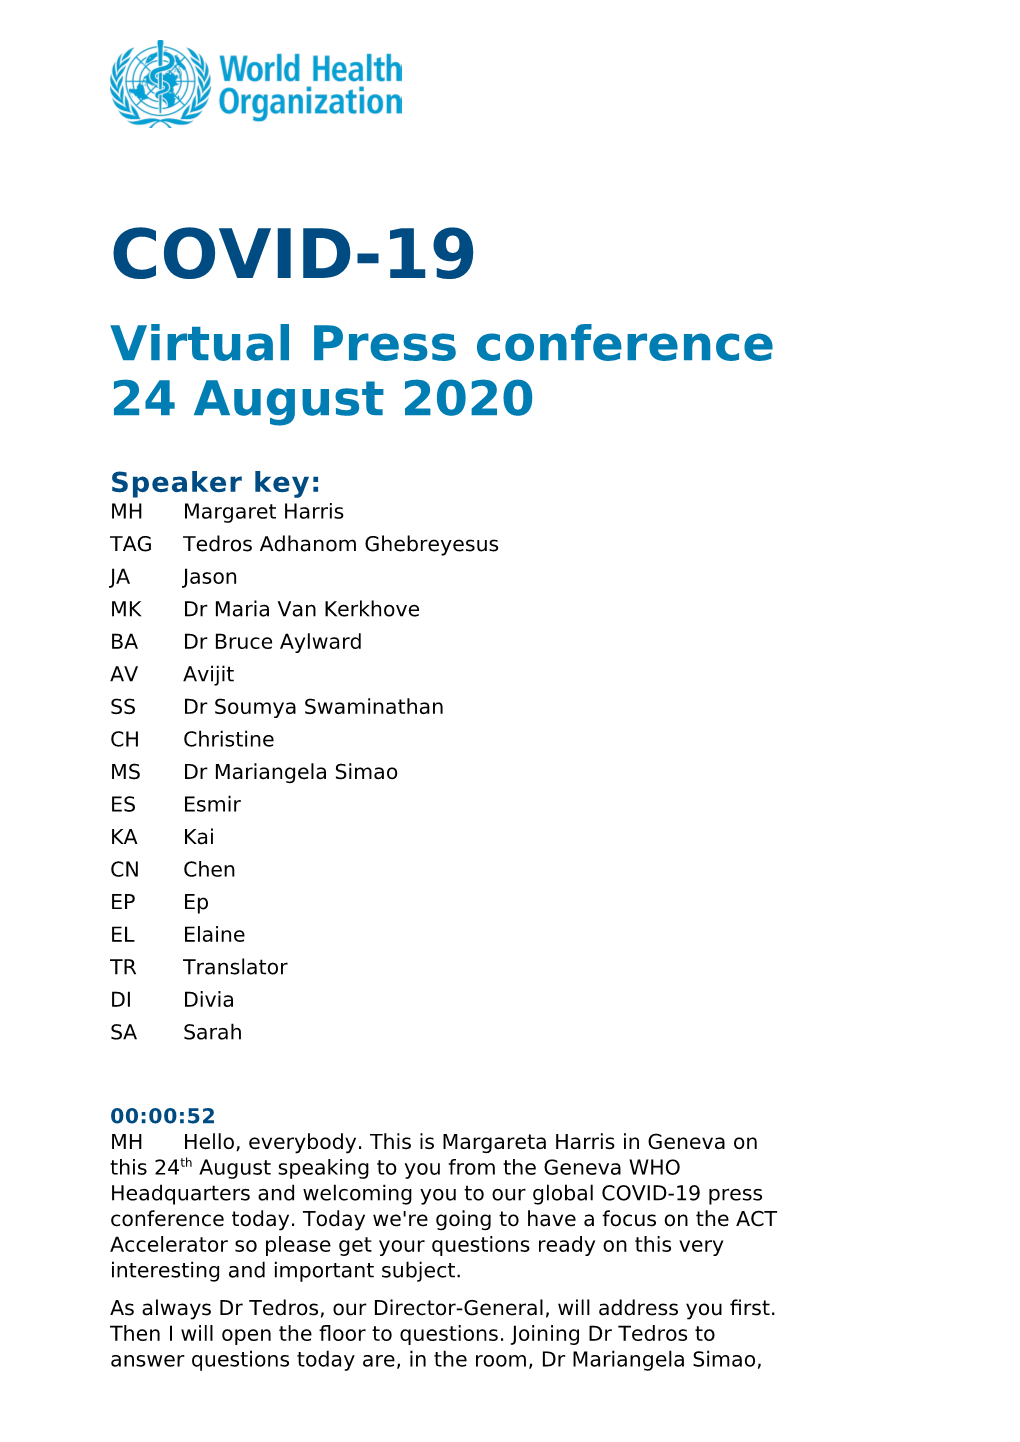 COVID-19 Virtual Press Conference 24 August 2020